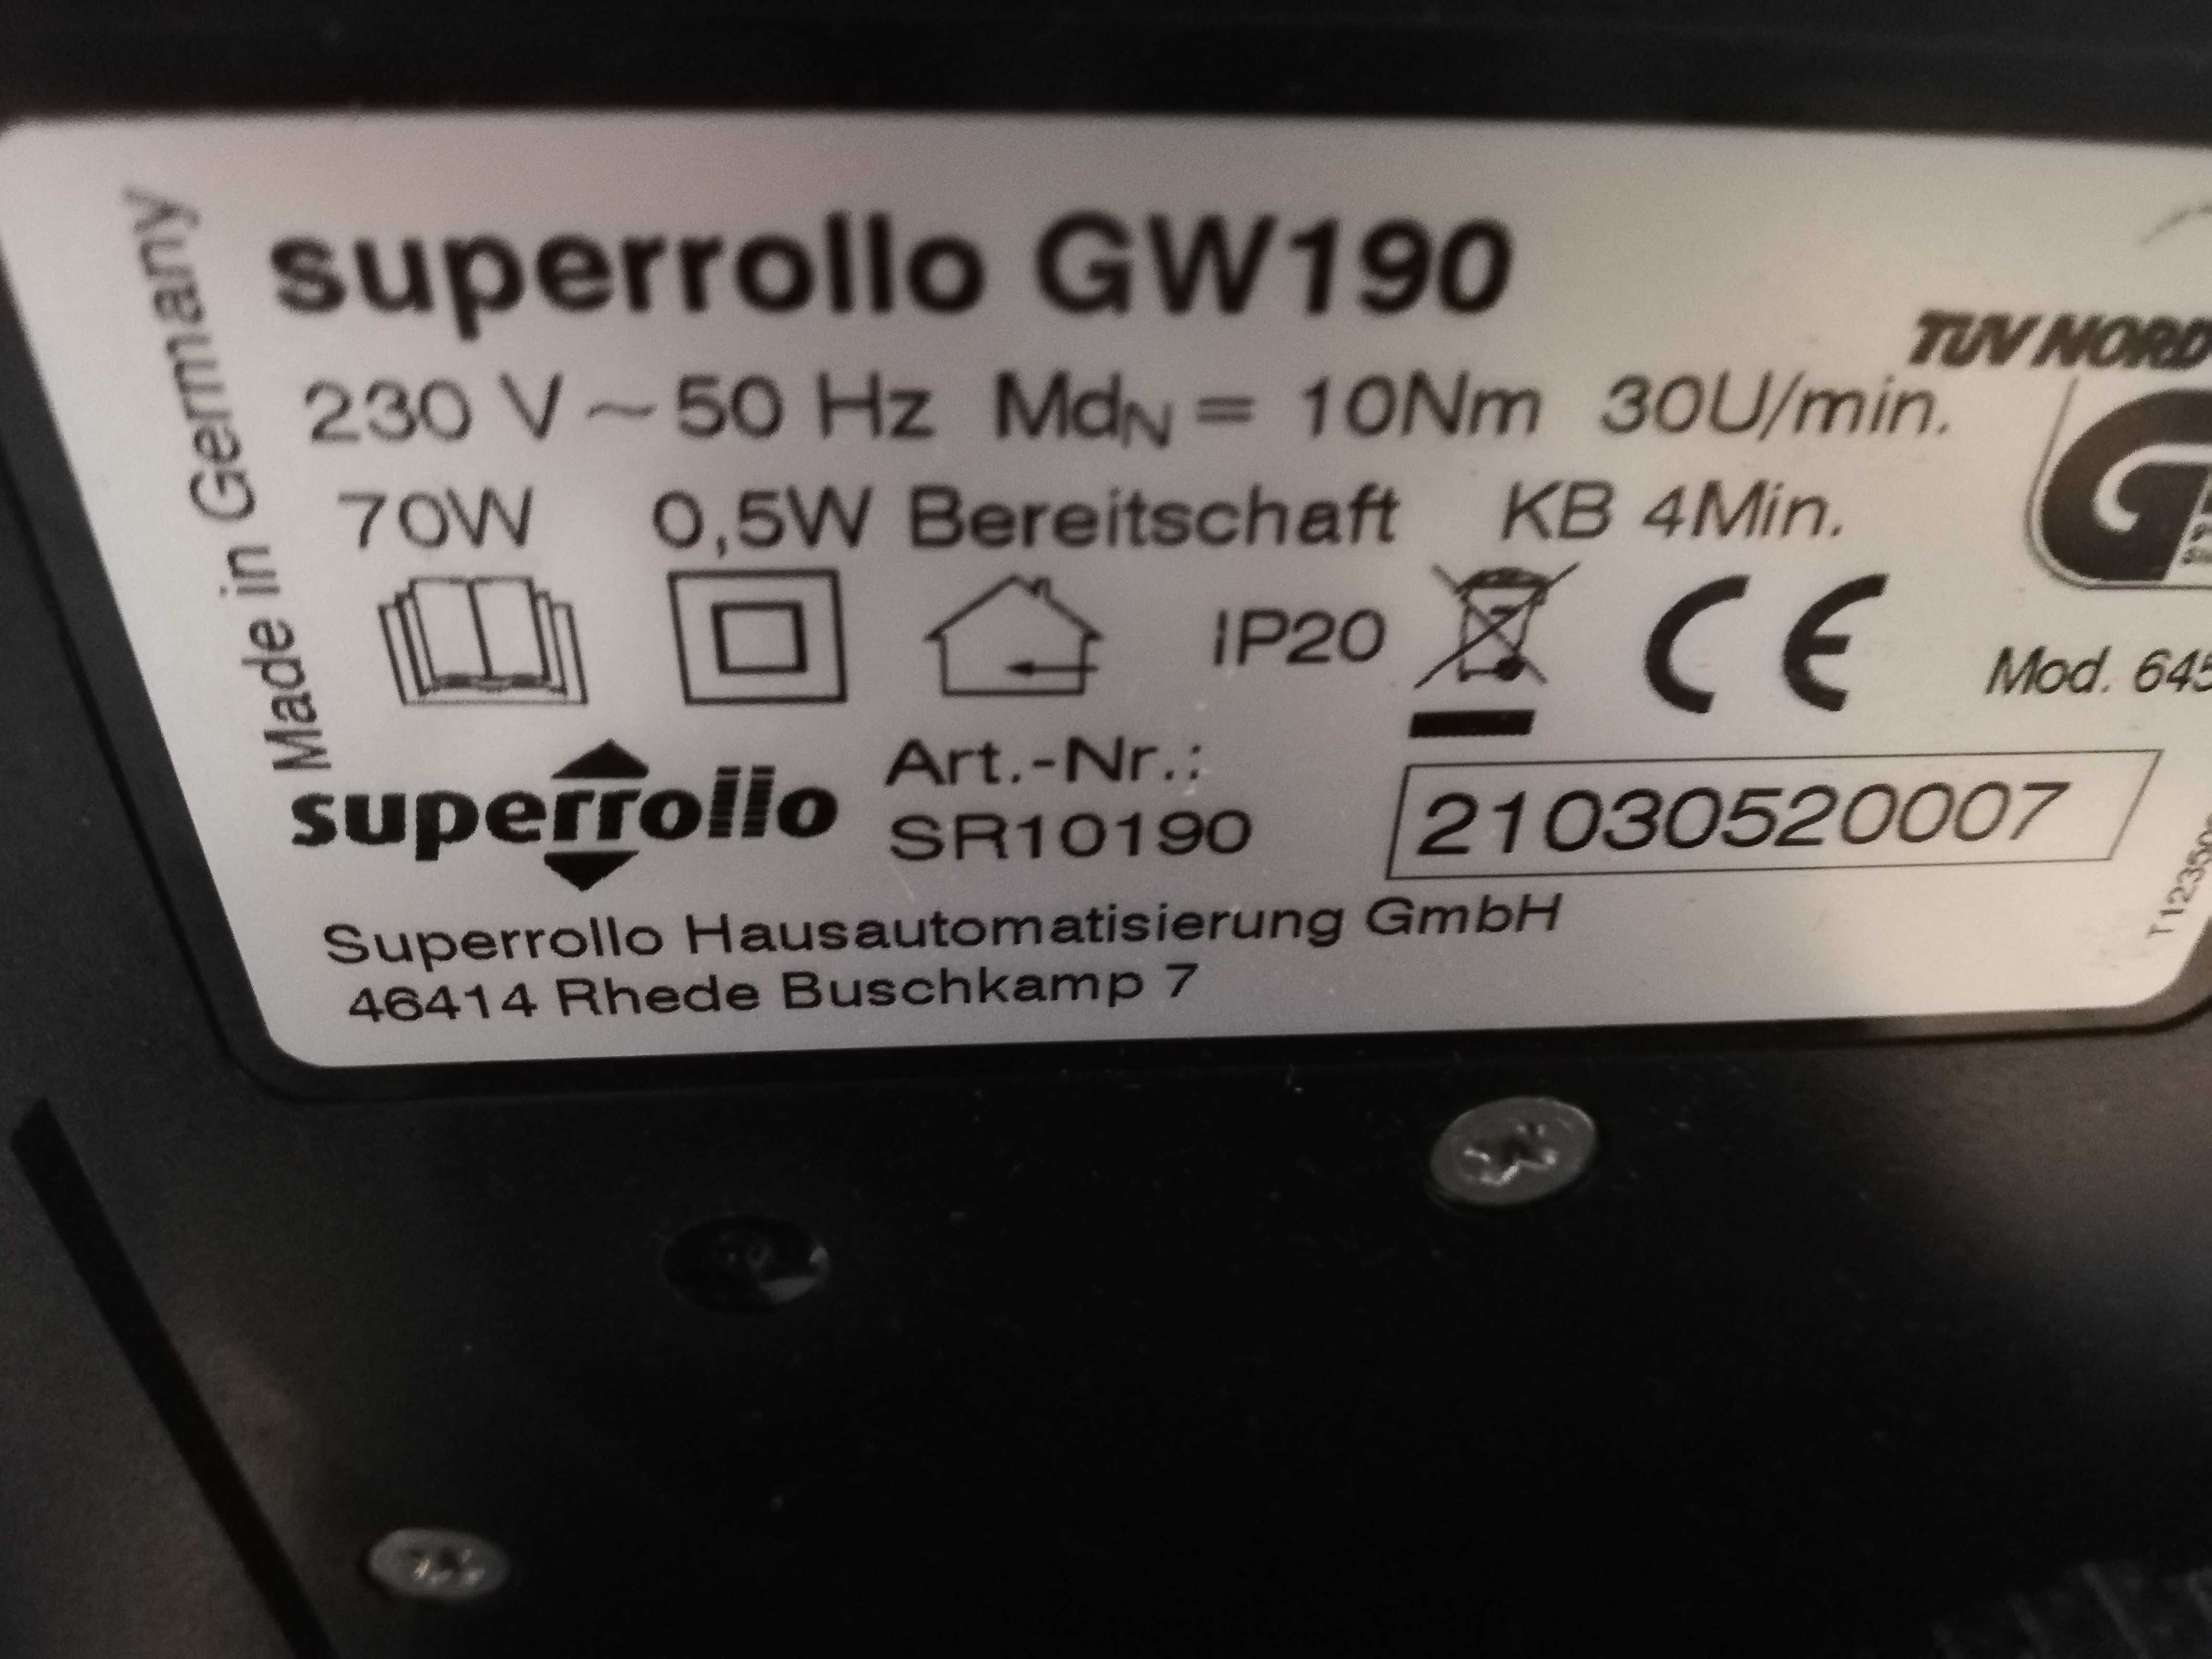 SuperRollo GW190 Napęd paskowy do rolet